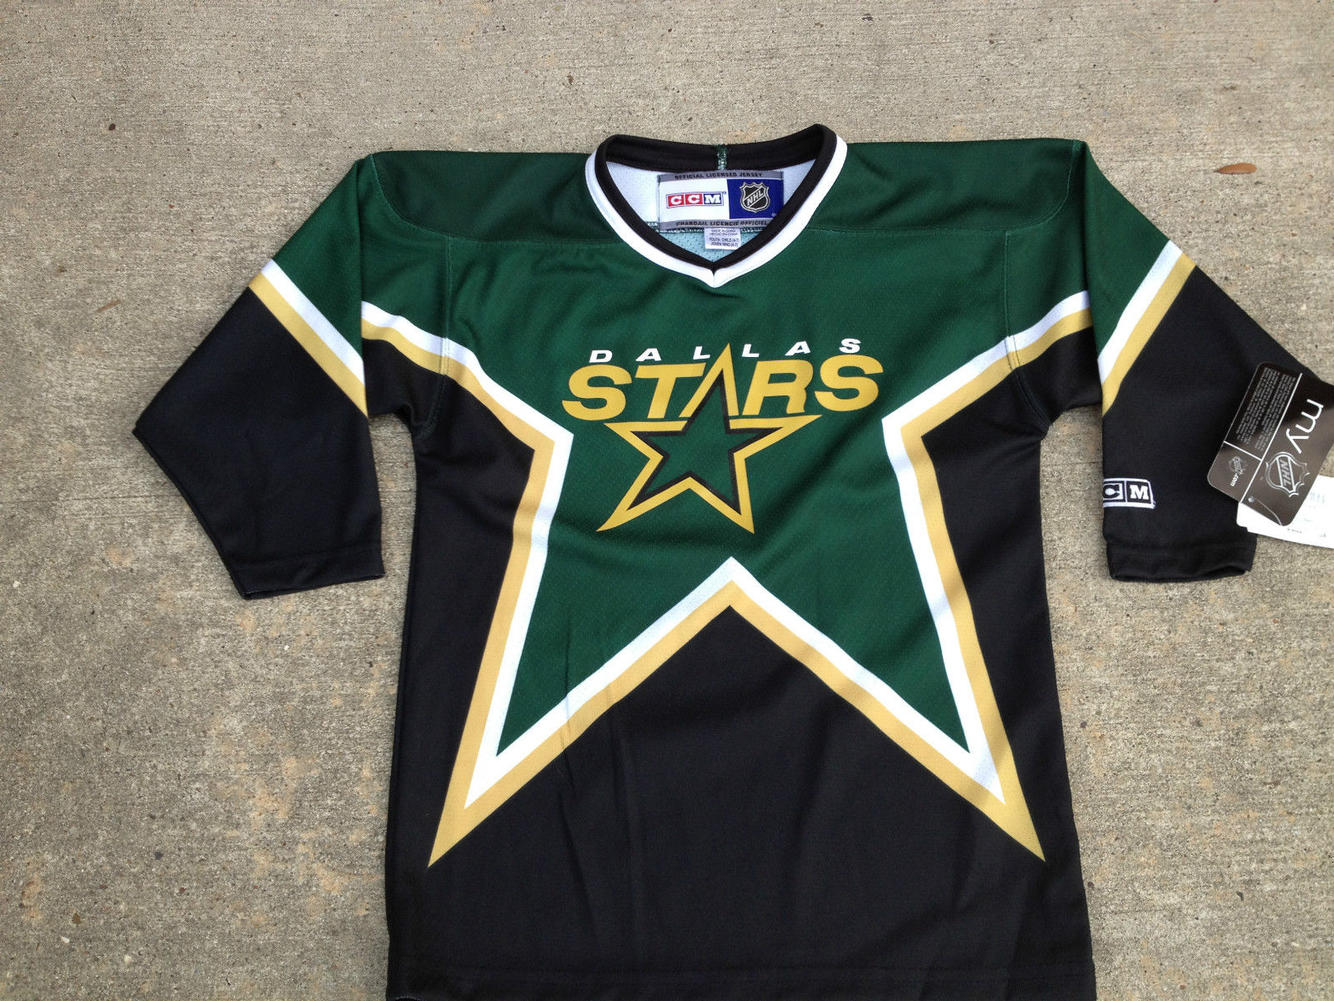 buy dallas stars jersey